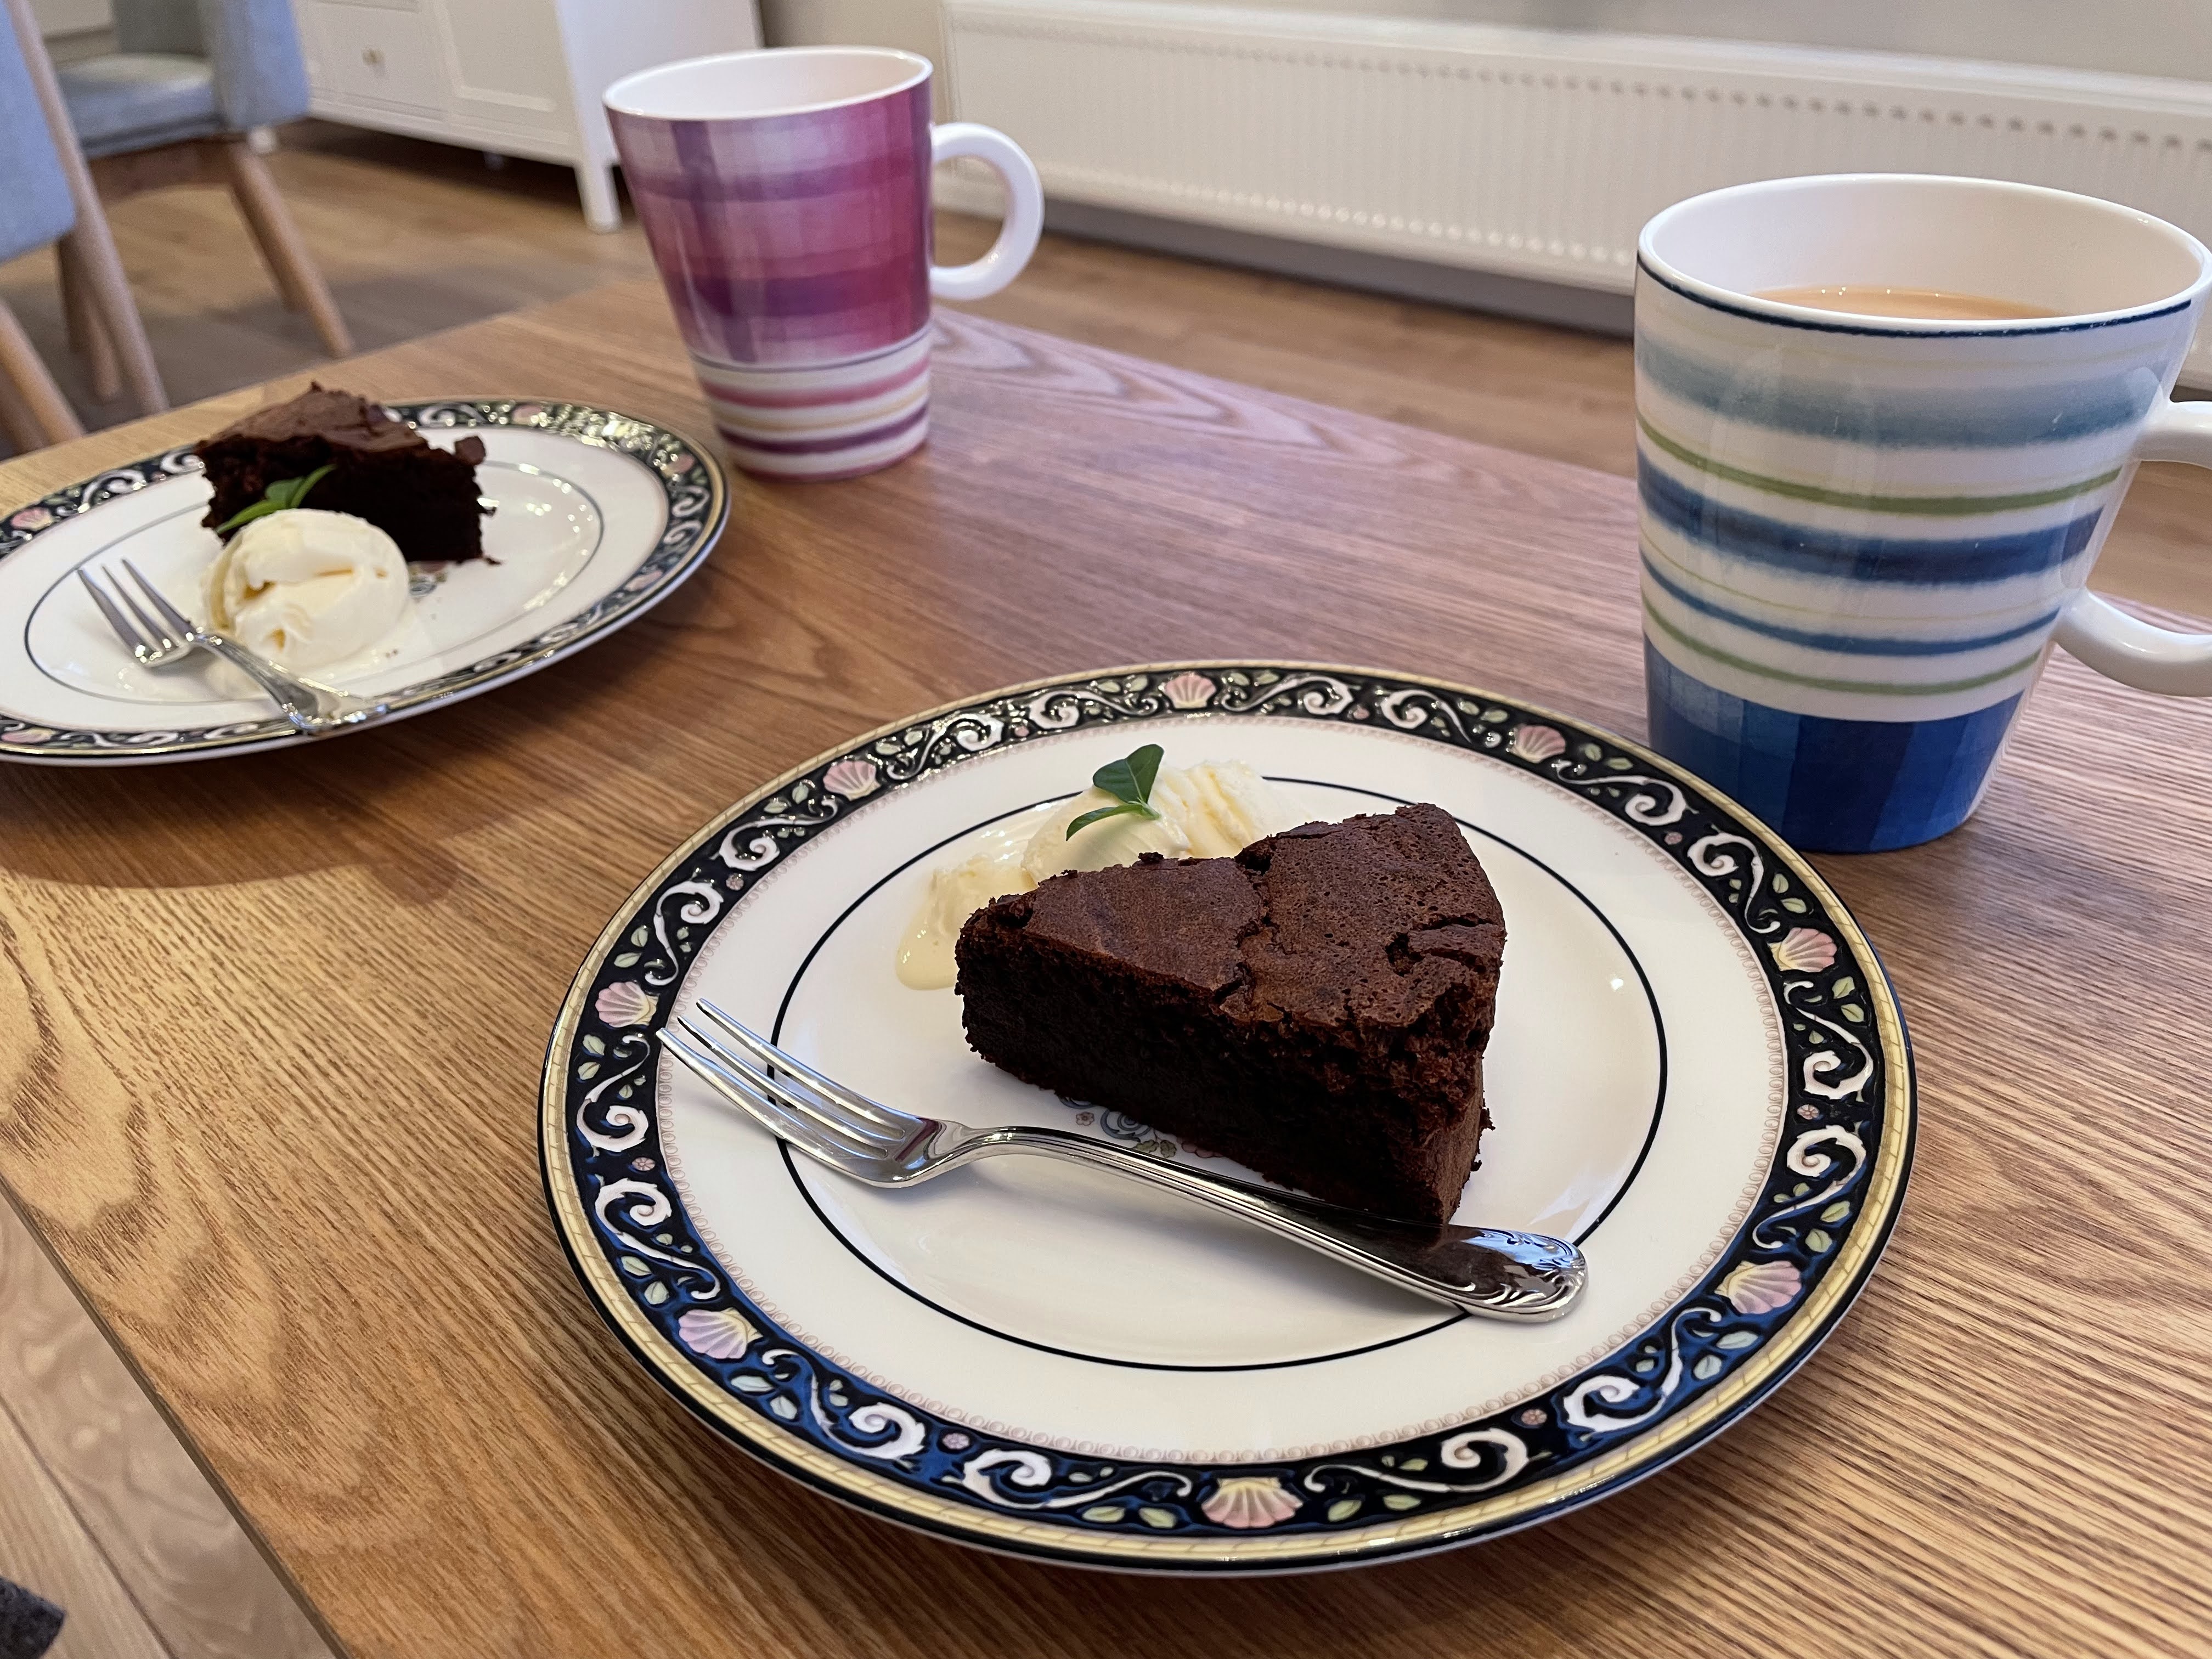 Chocolate cake and chocolate tea